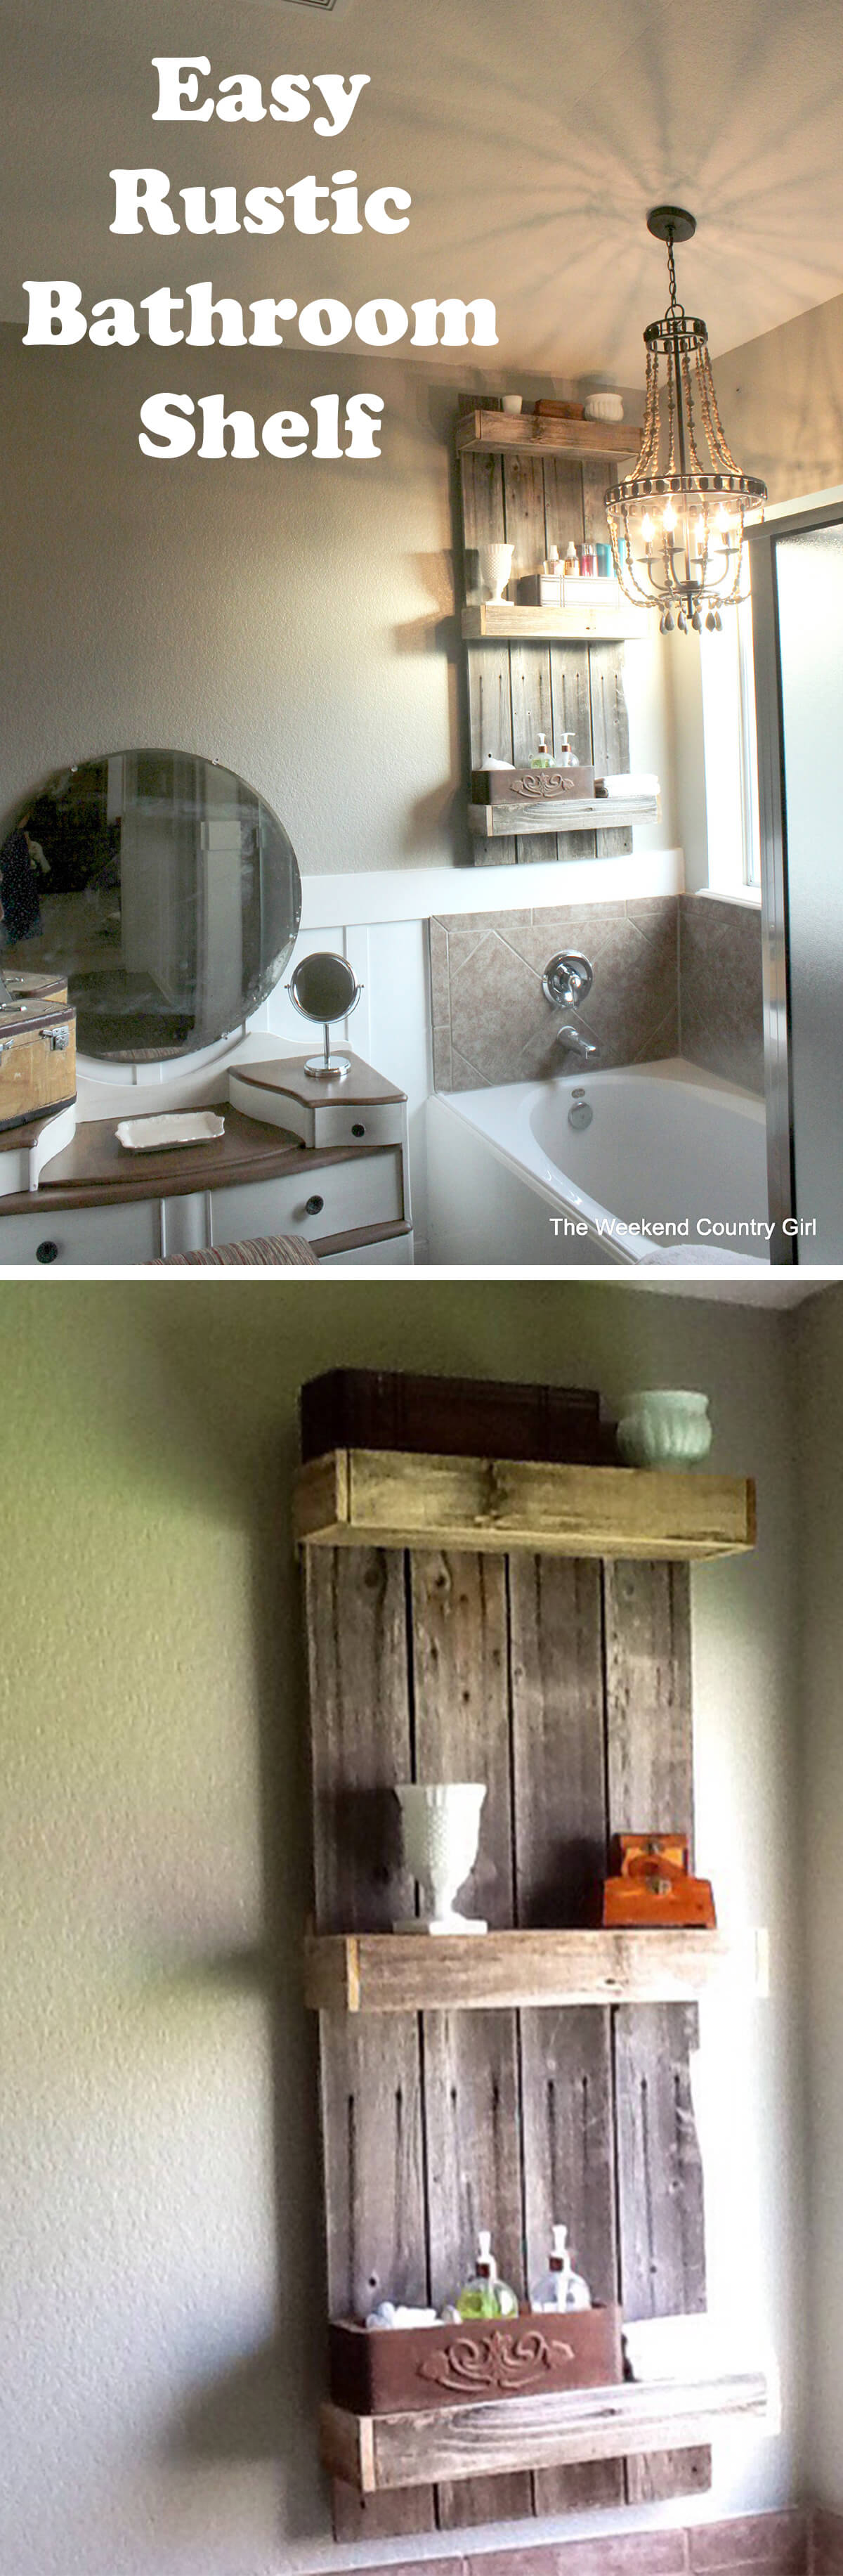 17. Easy Rustic Bathroom Shelf